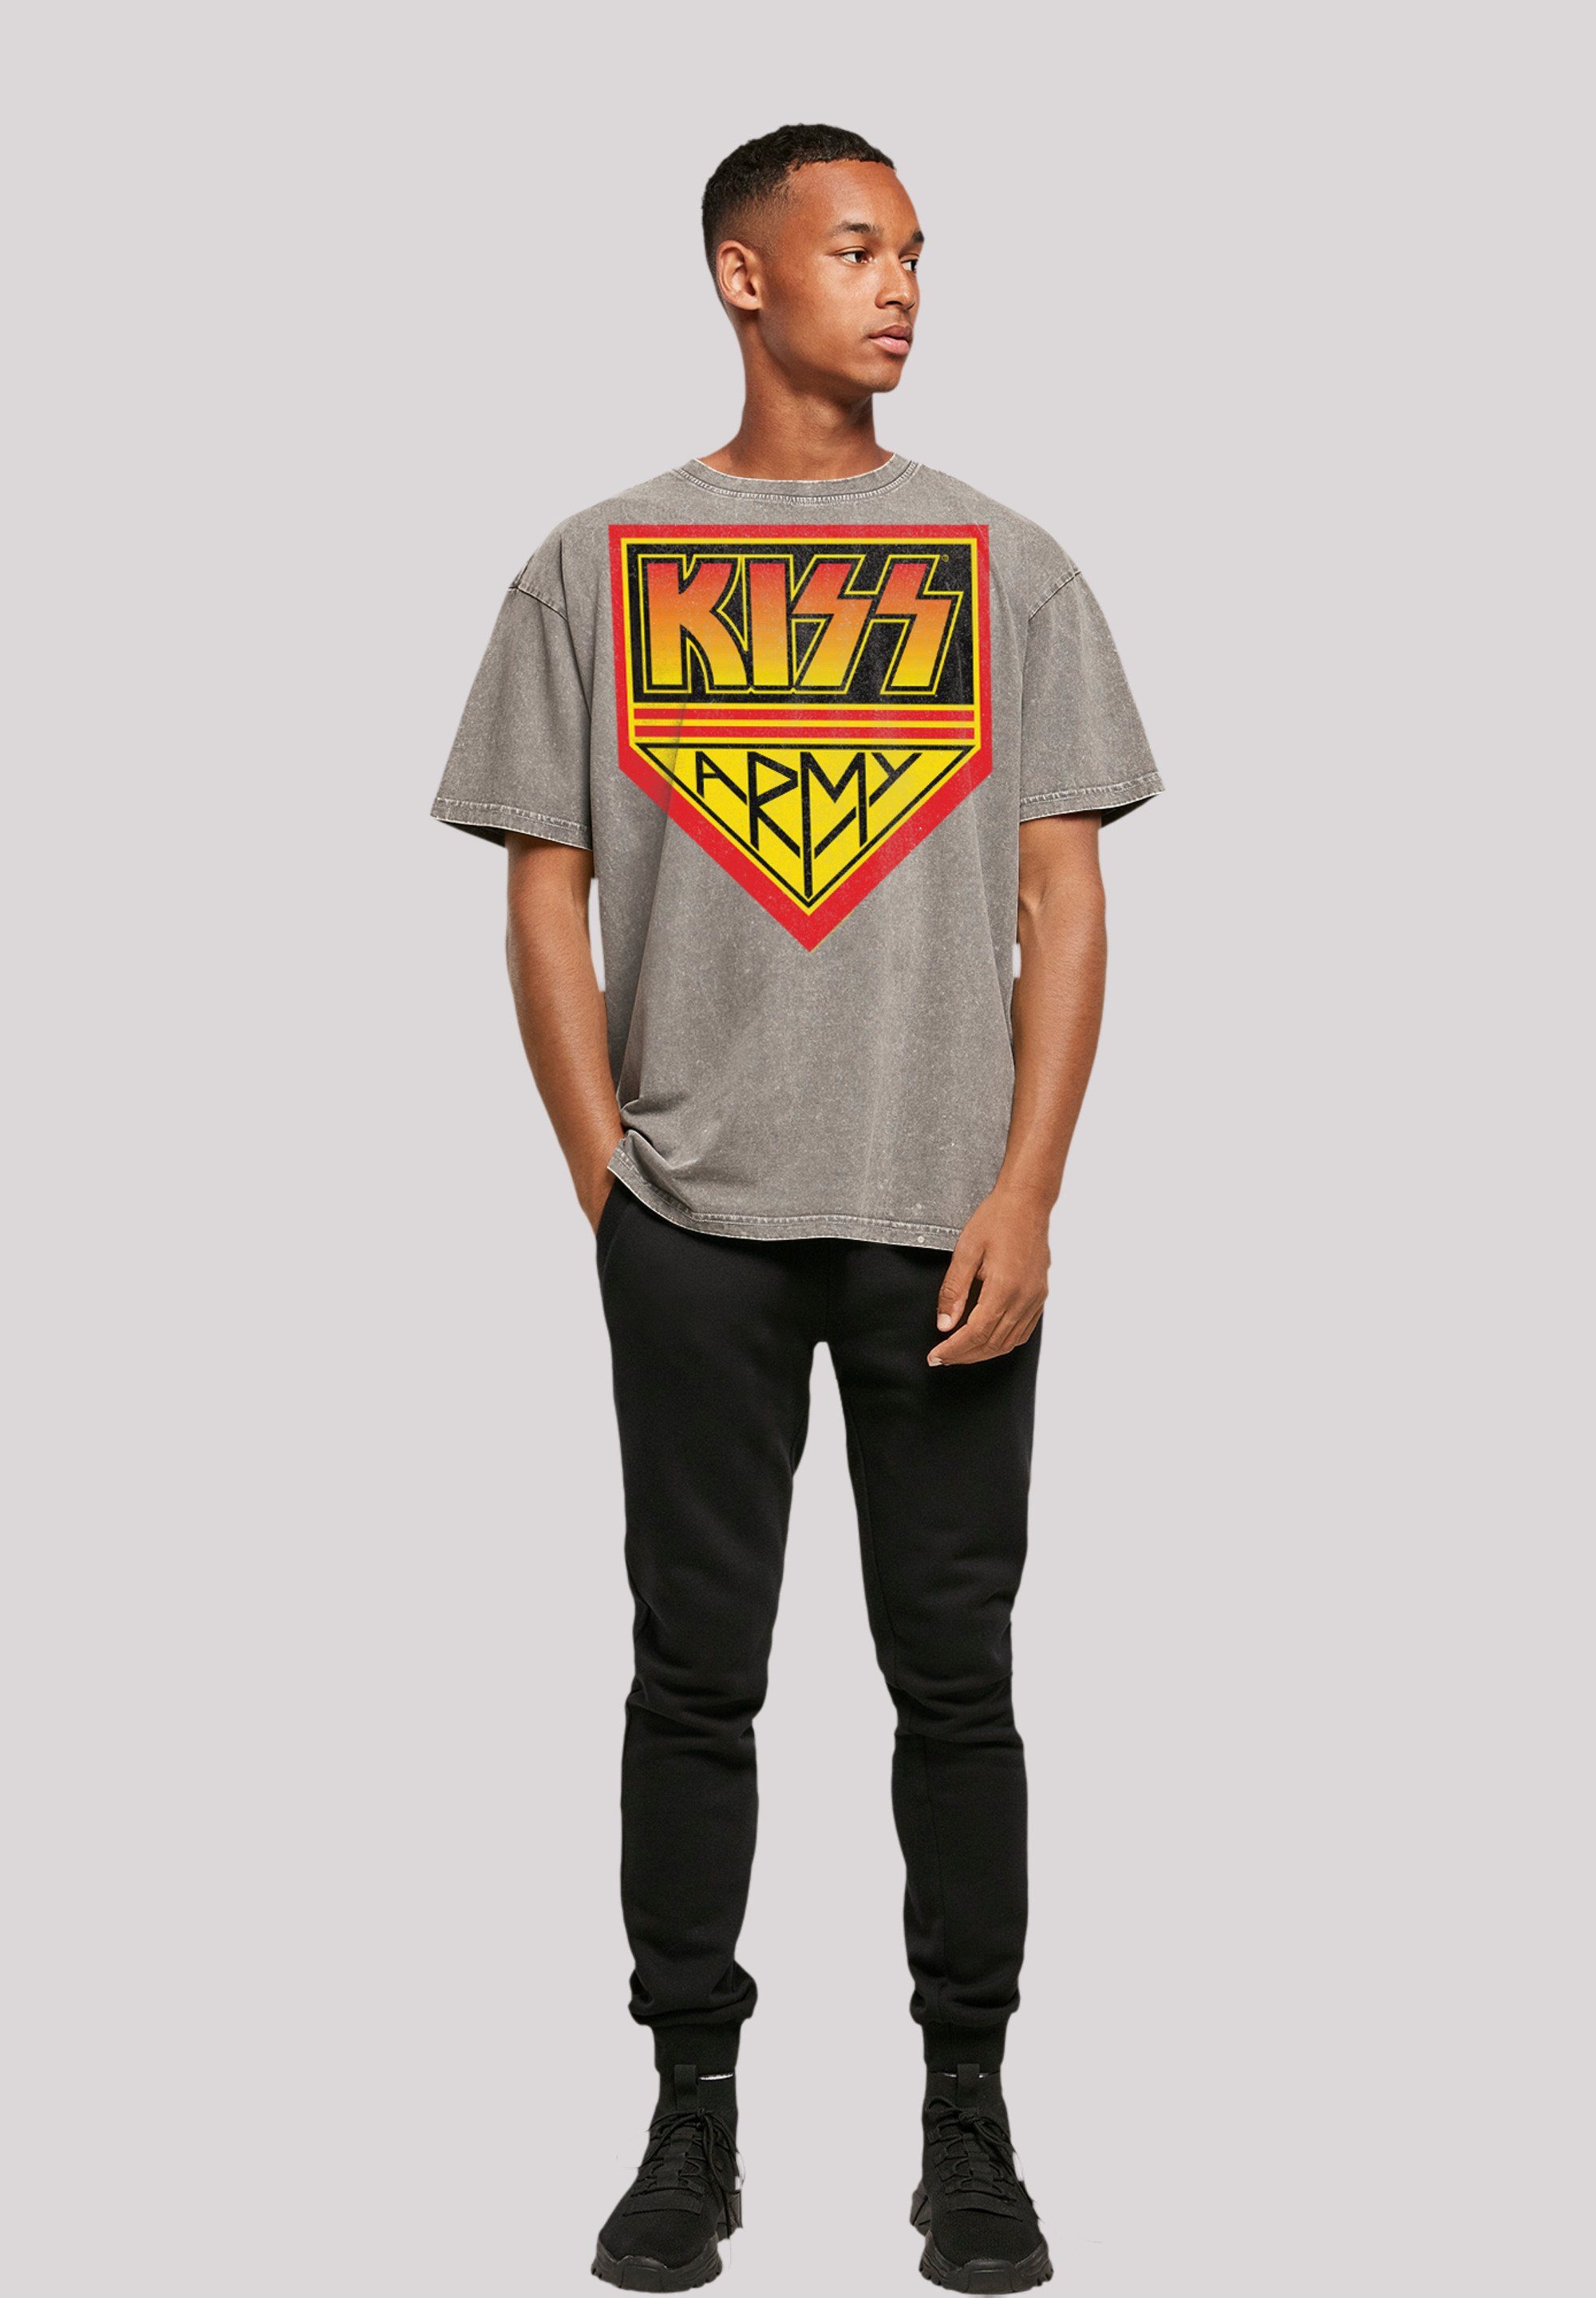 F4NT4STIC T-Shirt Kiss Rock Asphalt Rock Army Band By Qualität, Off Premium Logo Musik